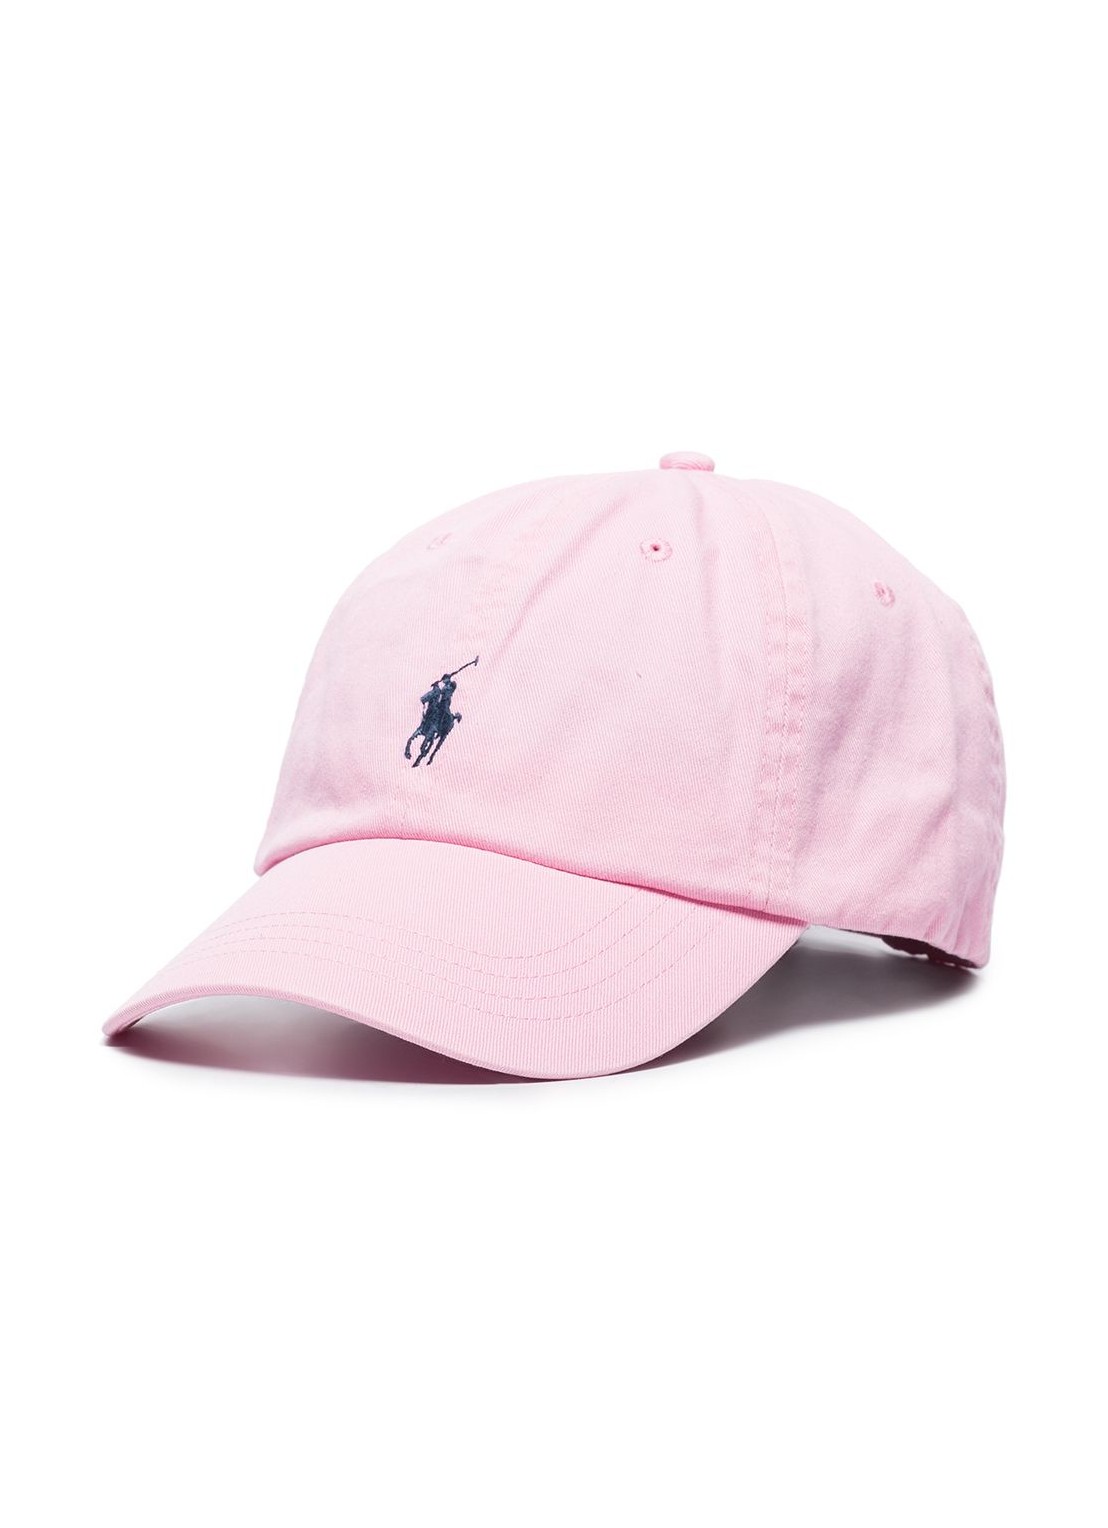 Gorras polo ralph lauren cap man sport cap-hat 710548524008 carmel pink jewel blue talla T/U
 